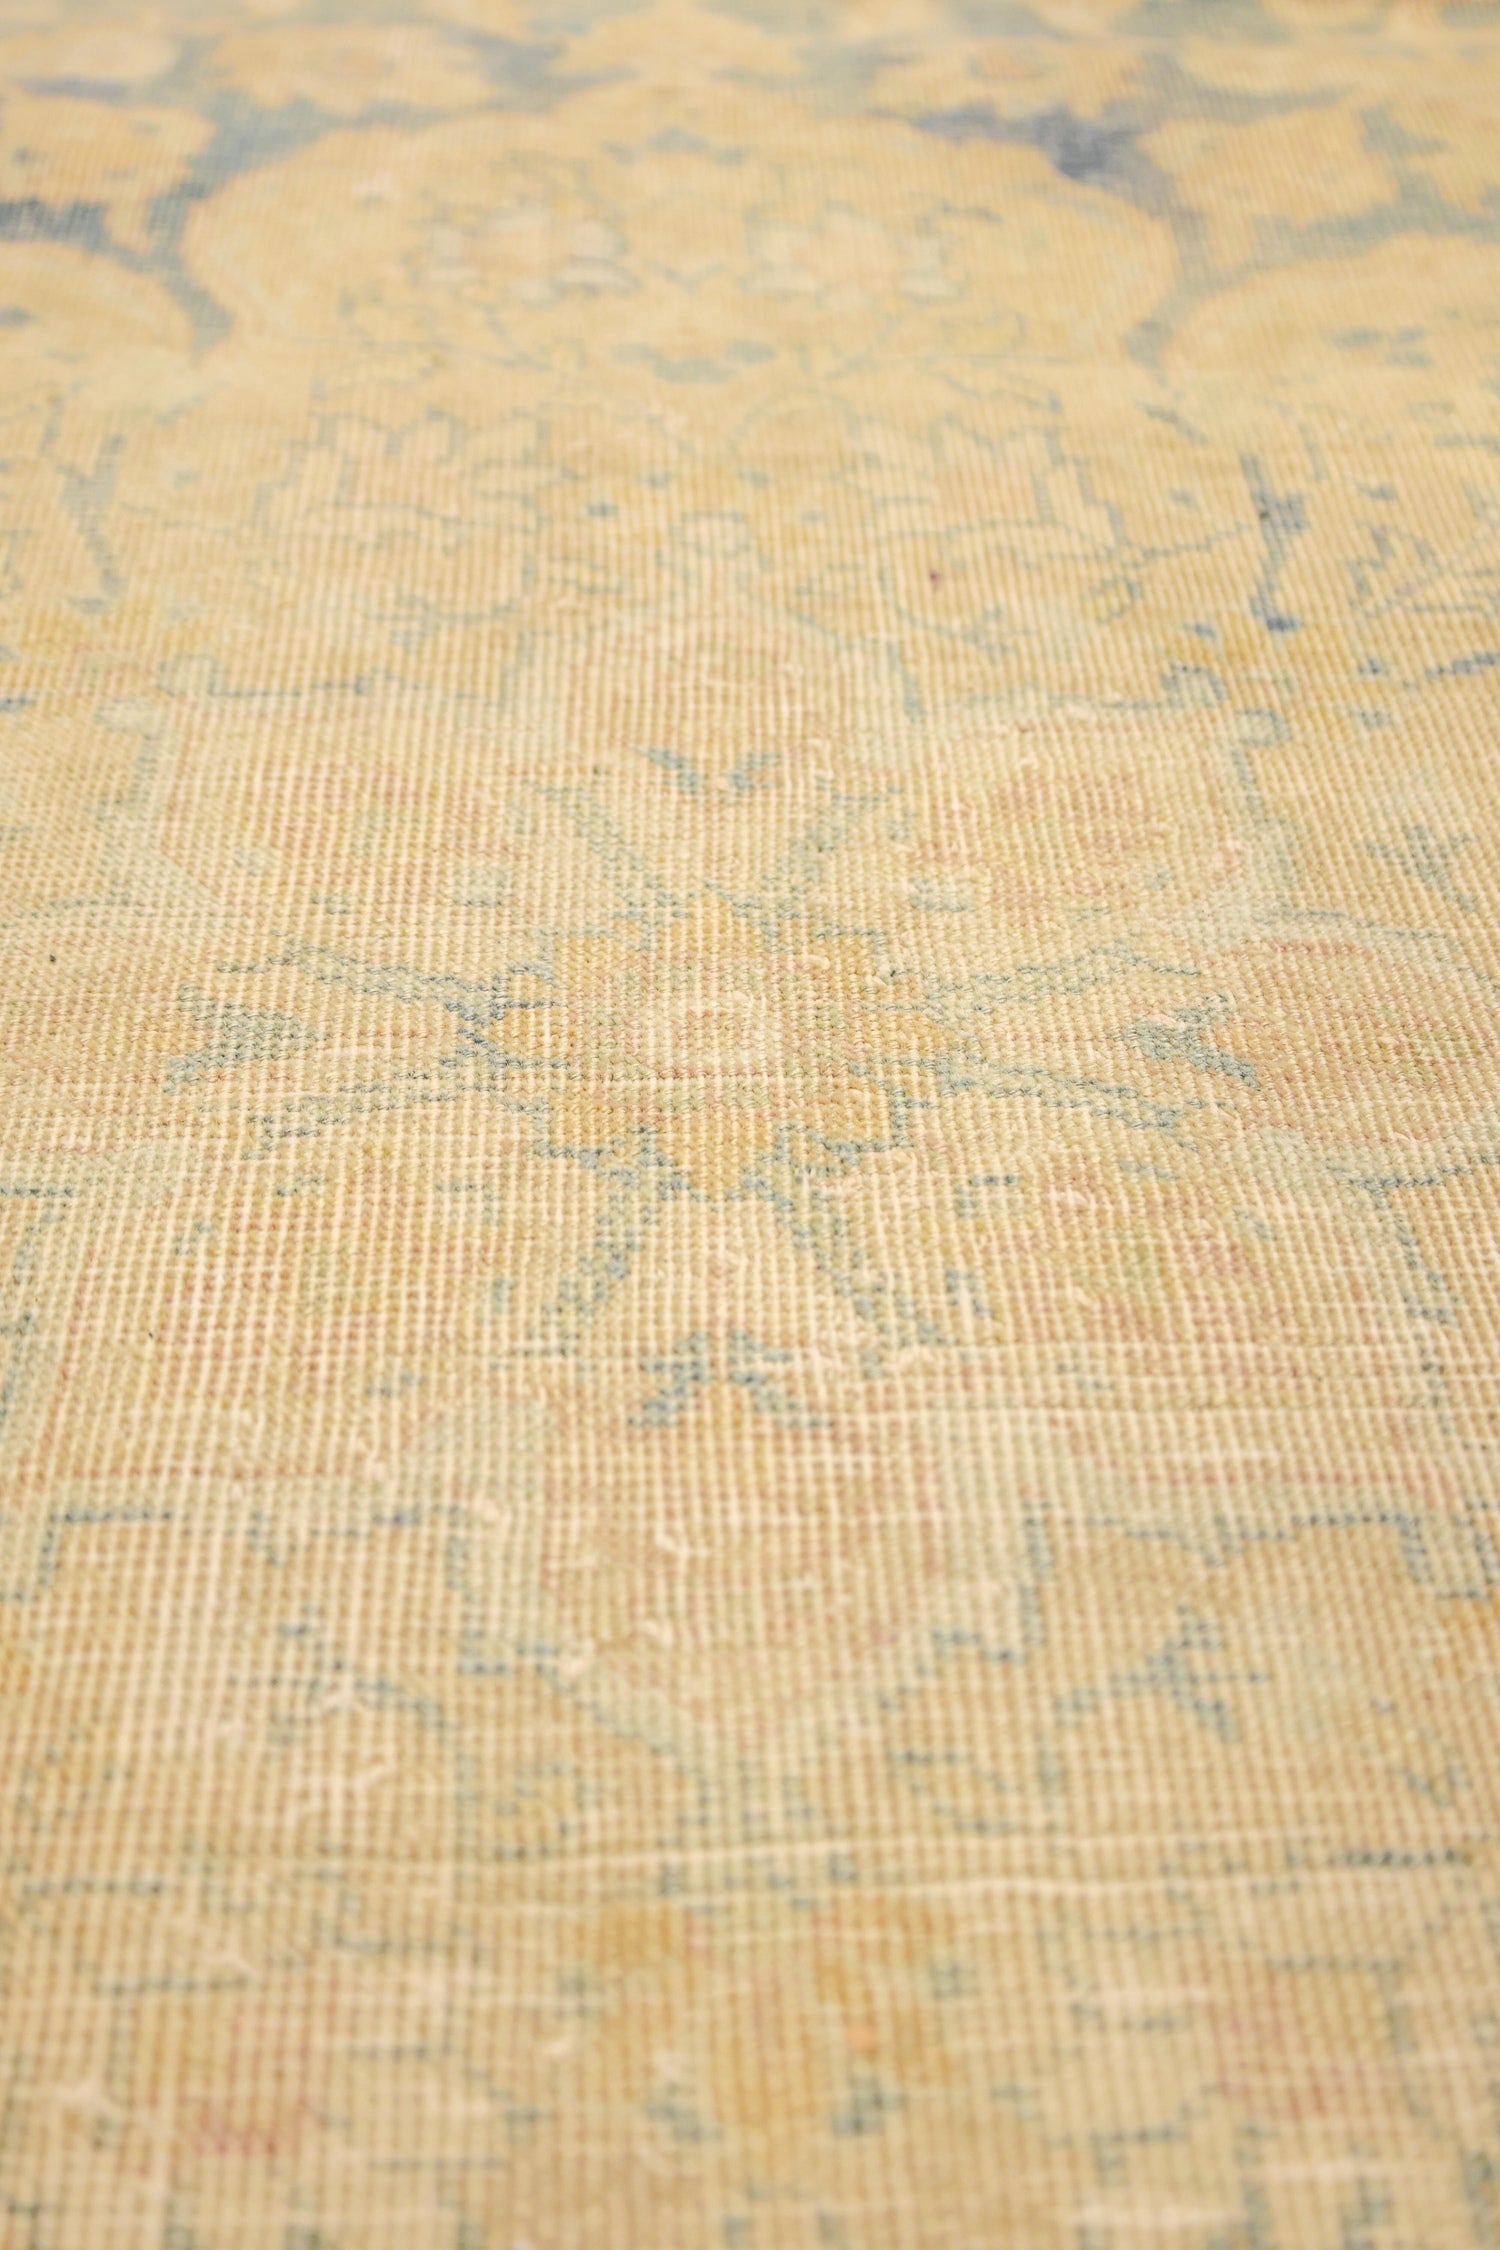 Vintage Tabriz Handwoven Traditional Rug, J67601